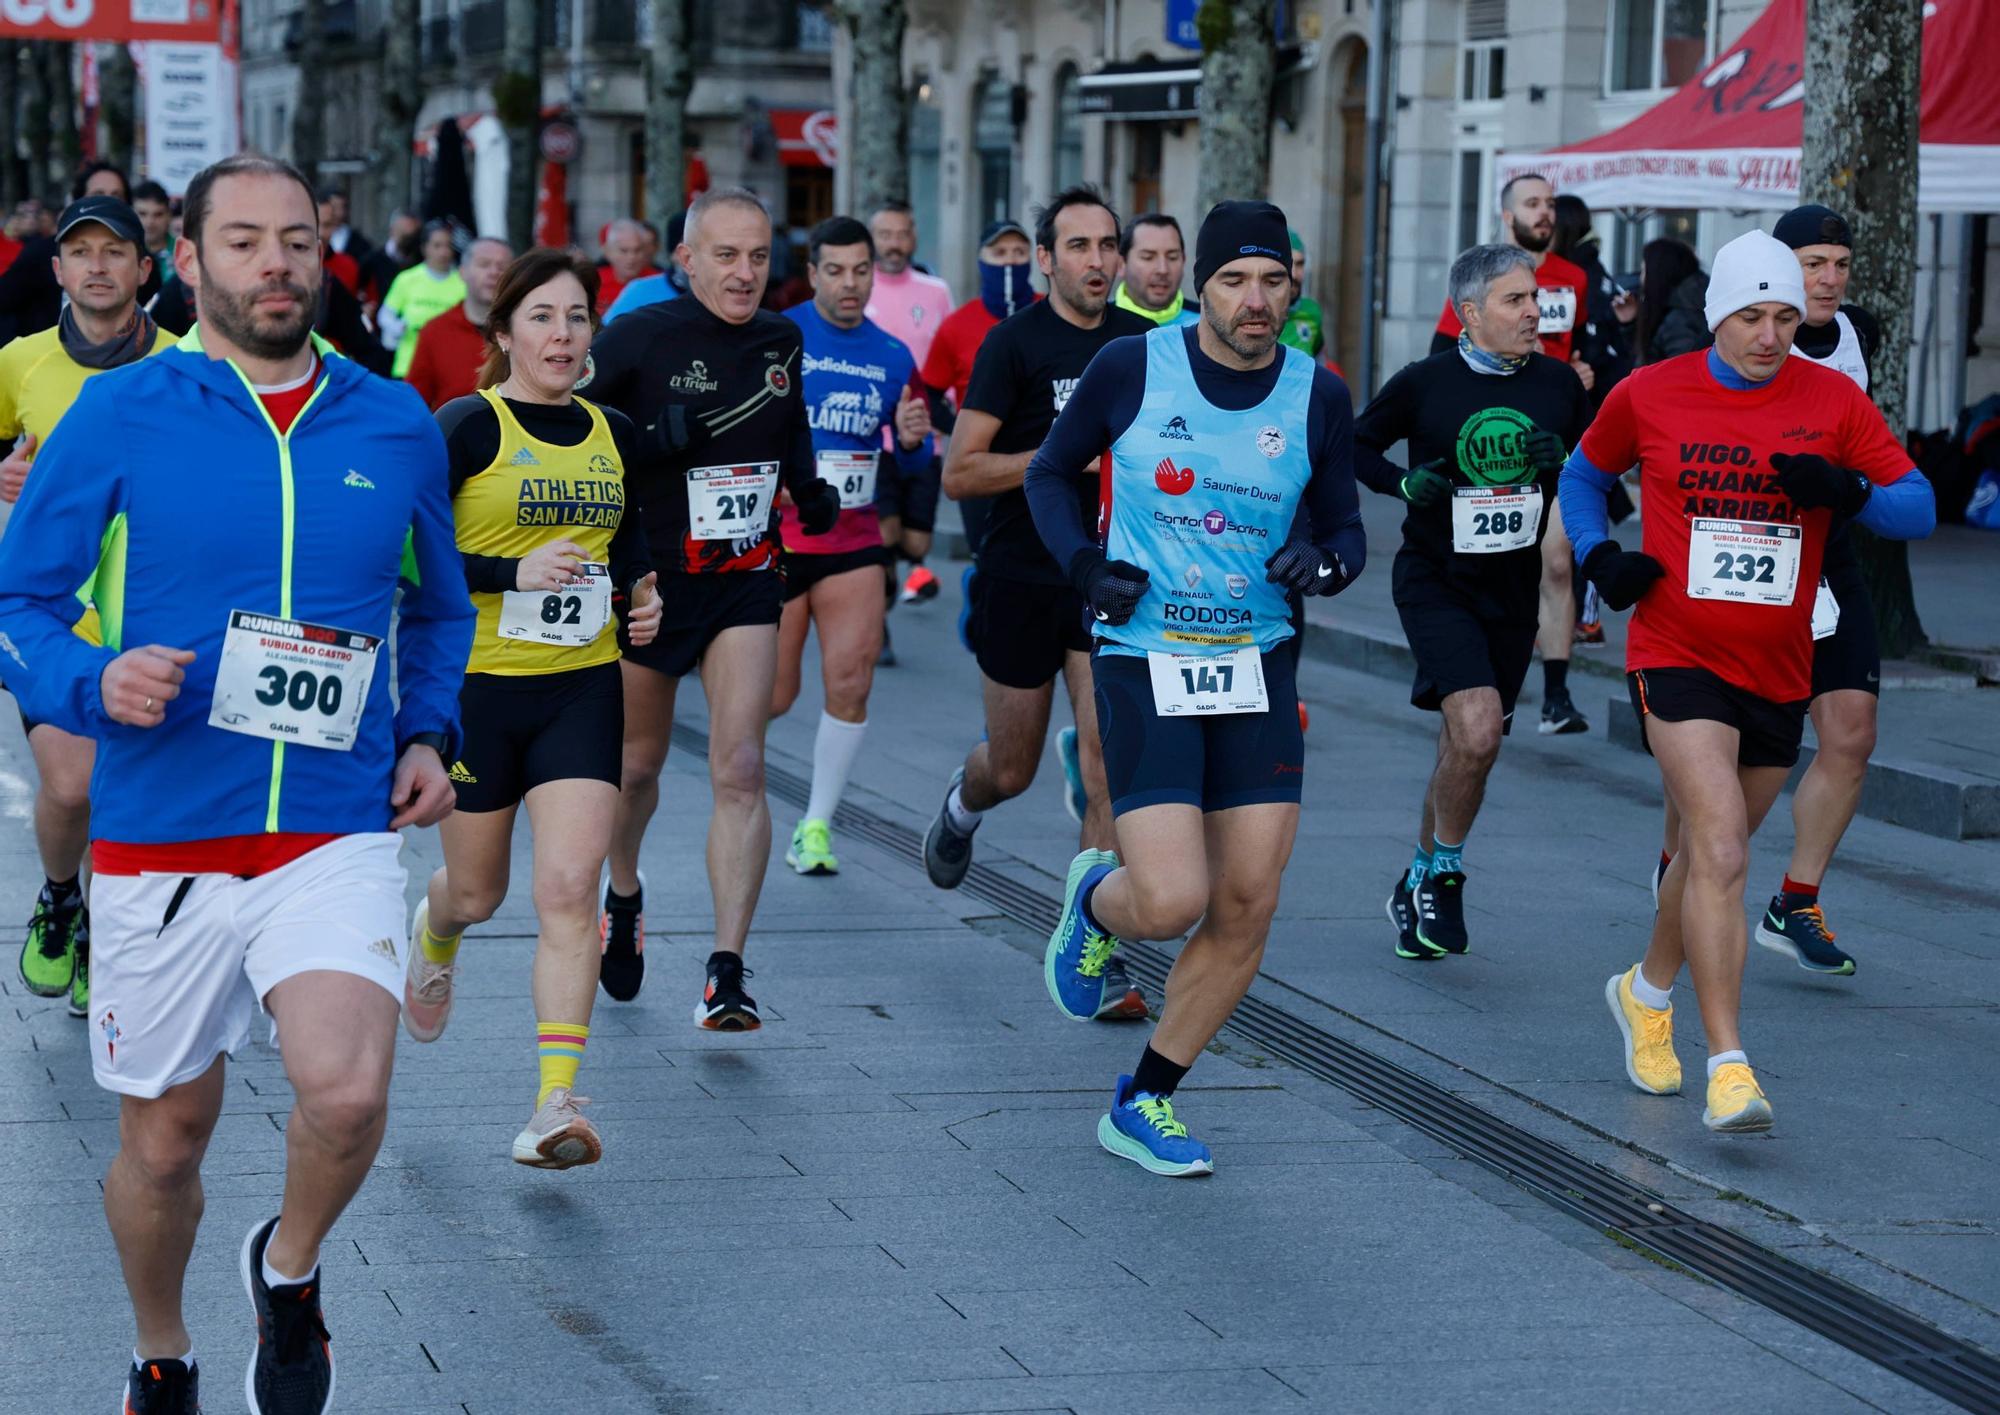 Pisadas de altura en Vigo: cientos de corredores suben O Castro